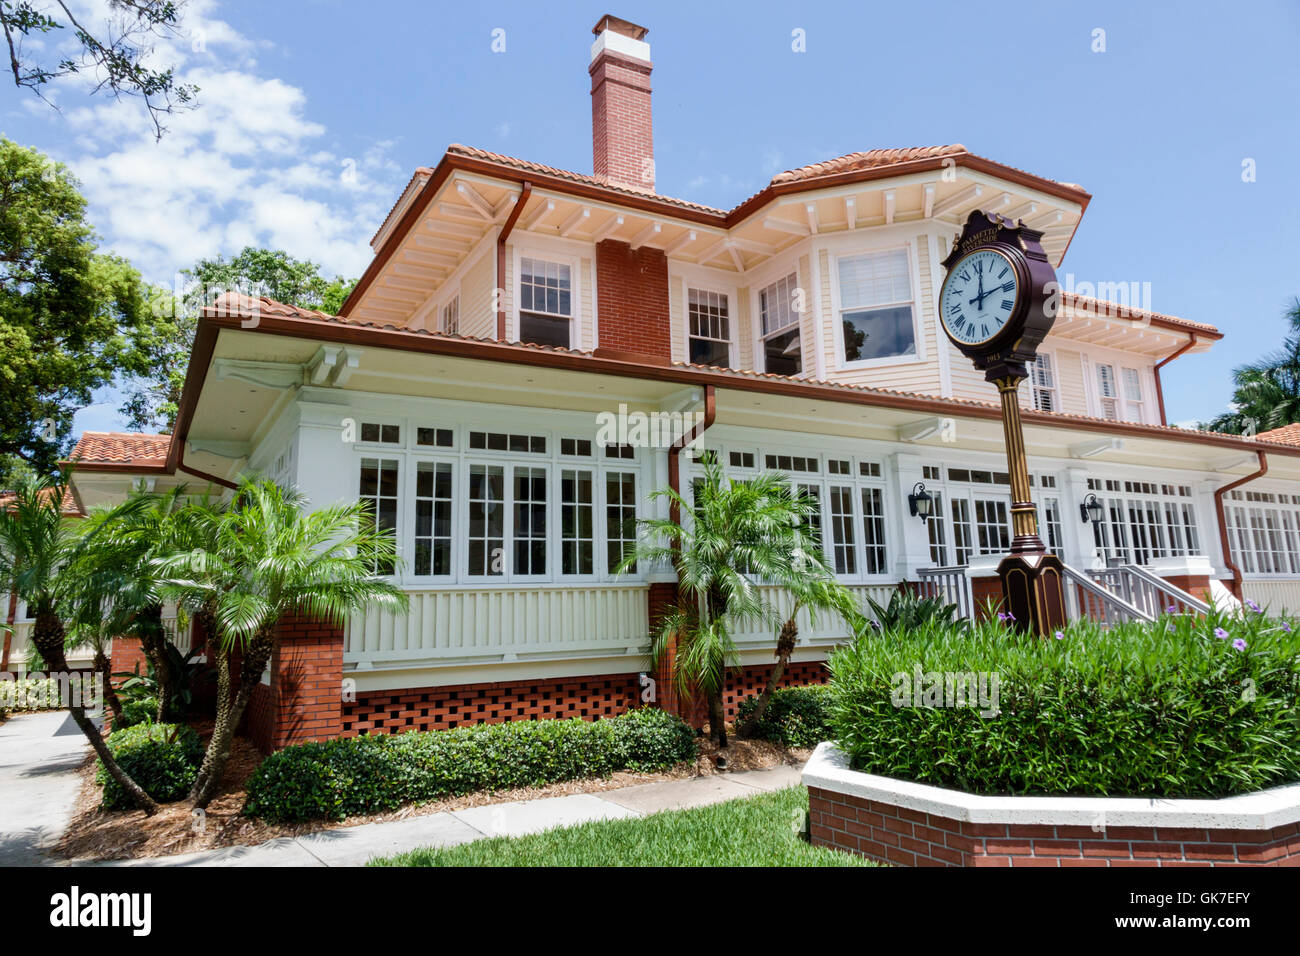 Florida Palmetto,Palmetto Riverside Bed & Breakfast,historic home,landmark,1913,guesthouse,exterior,garden,Sears Catalog Home,kit home,Sears,Roebuck & Stock Photo